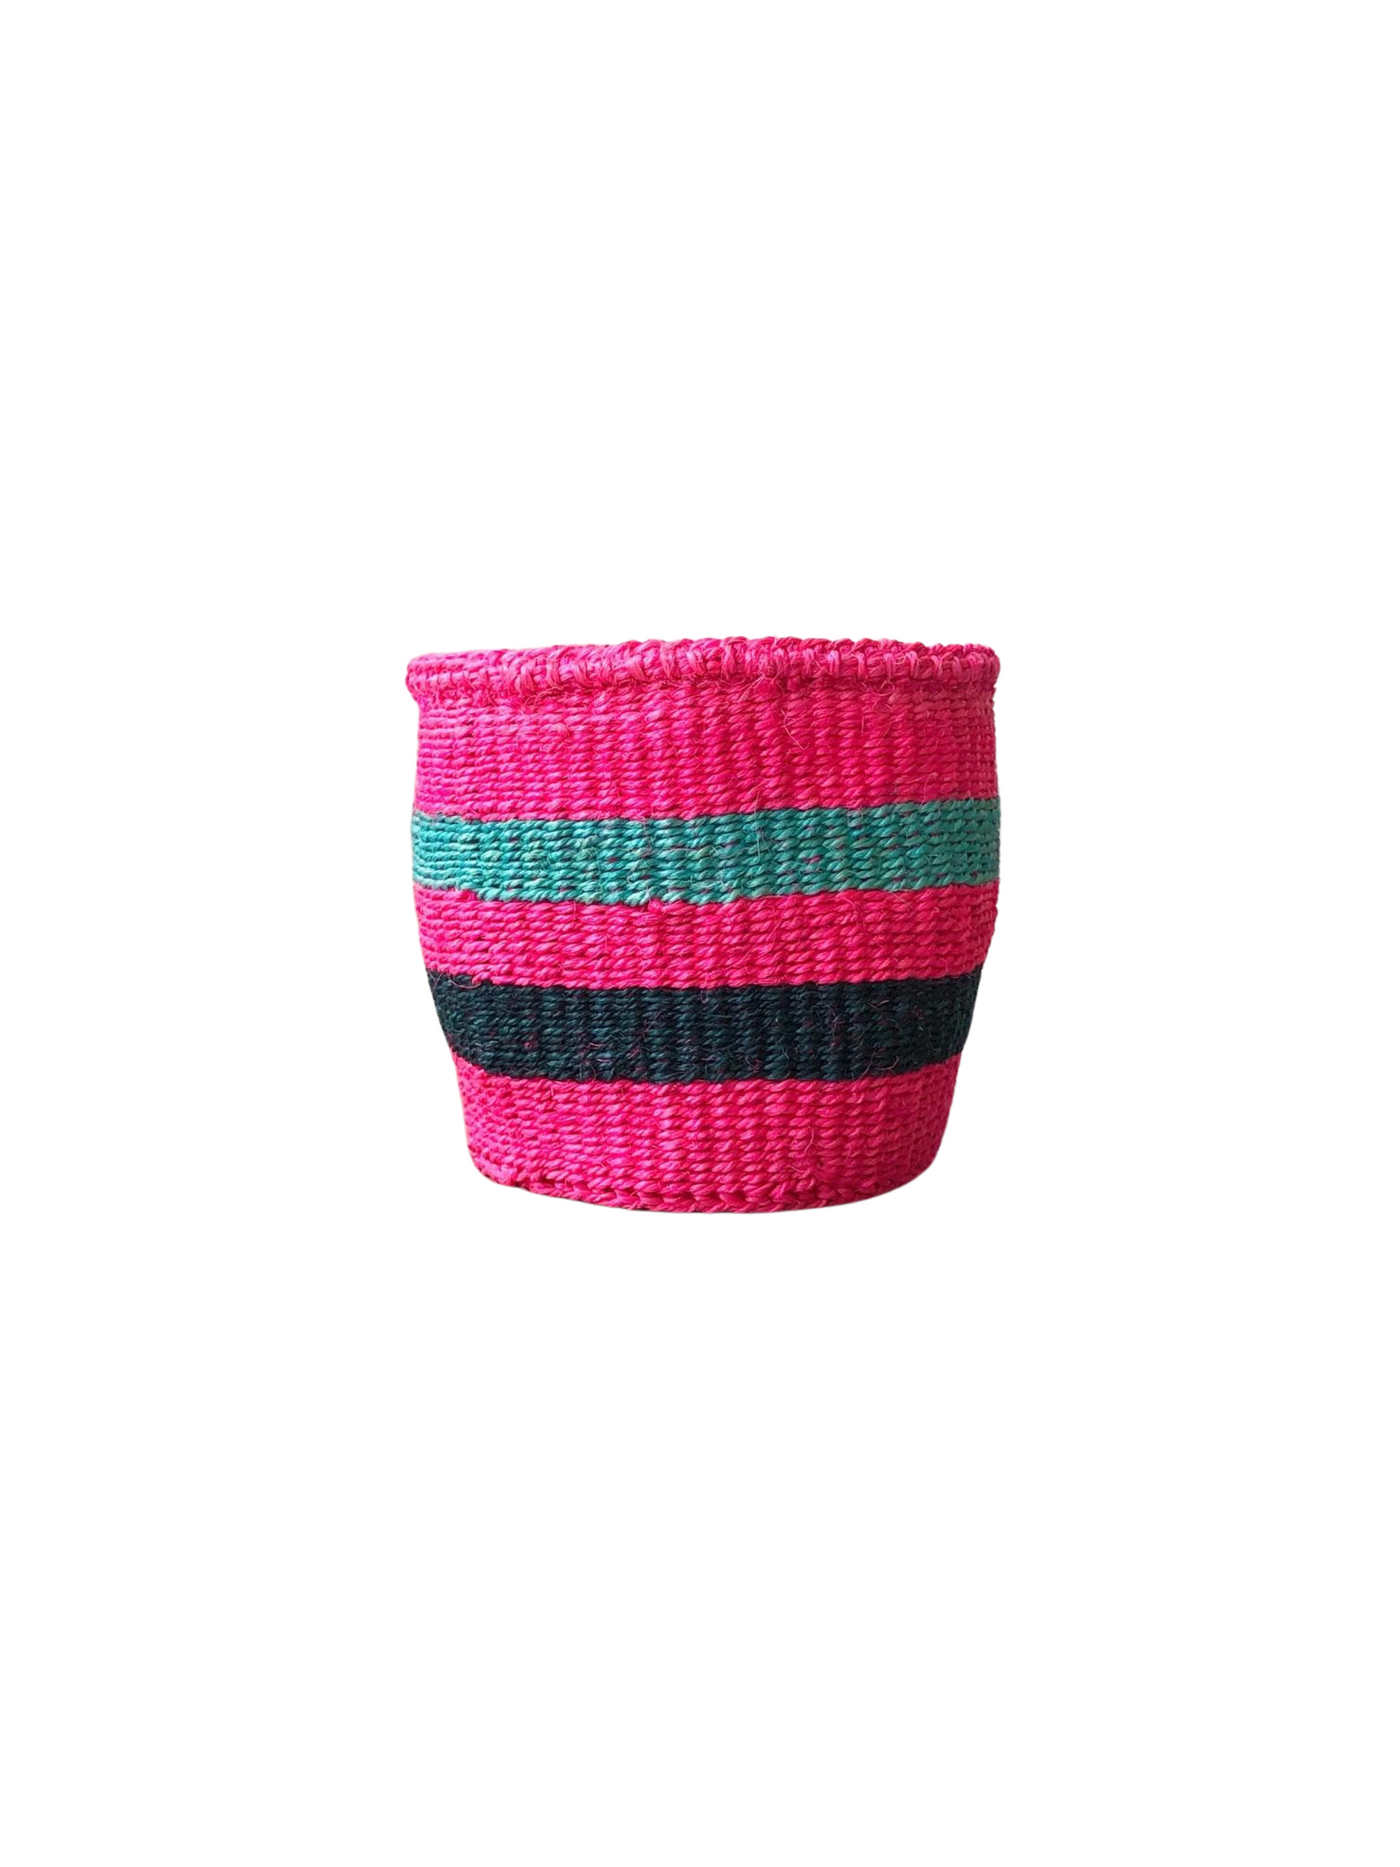 Storage Plant Basket - Small Pink Teal Blue